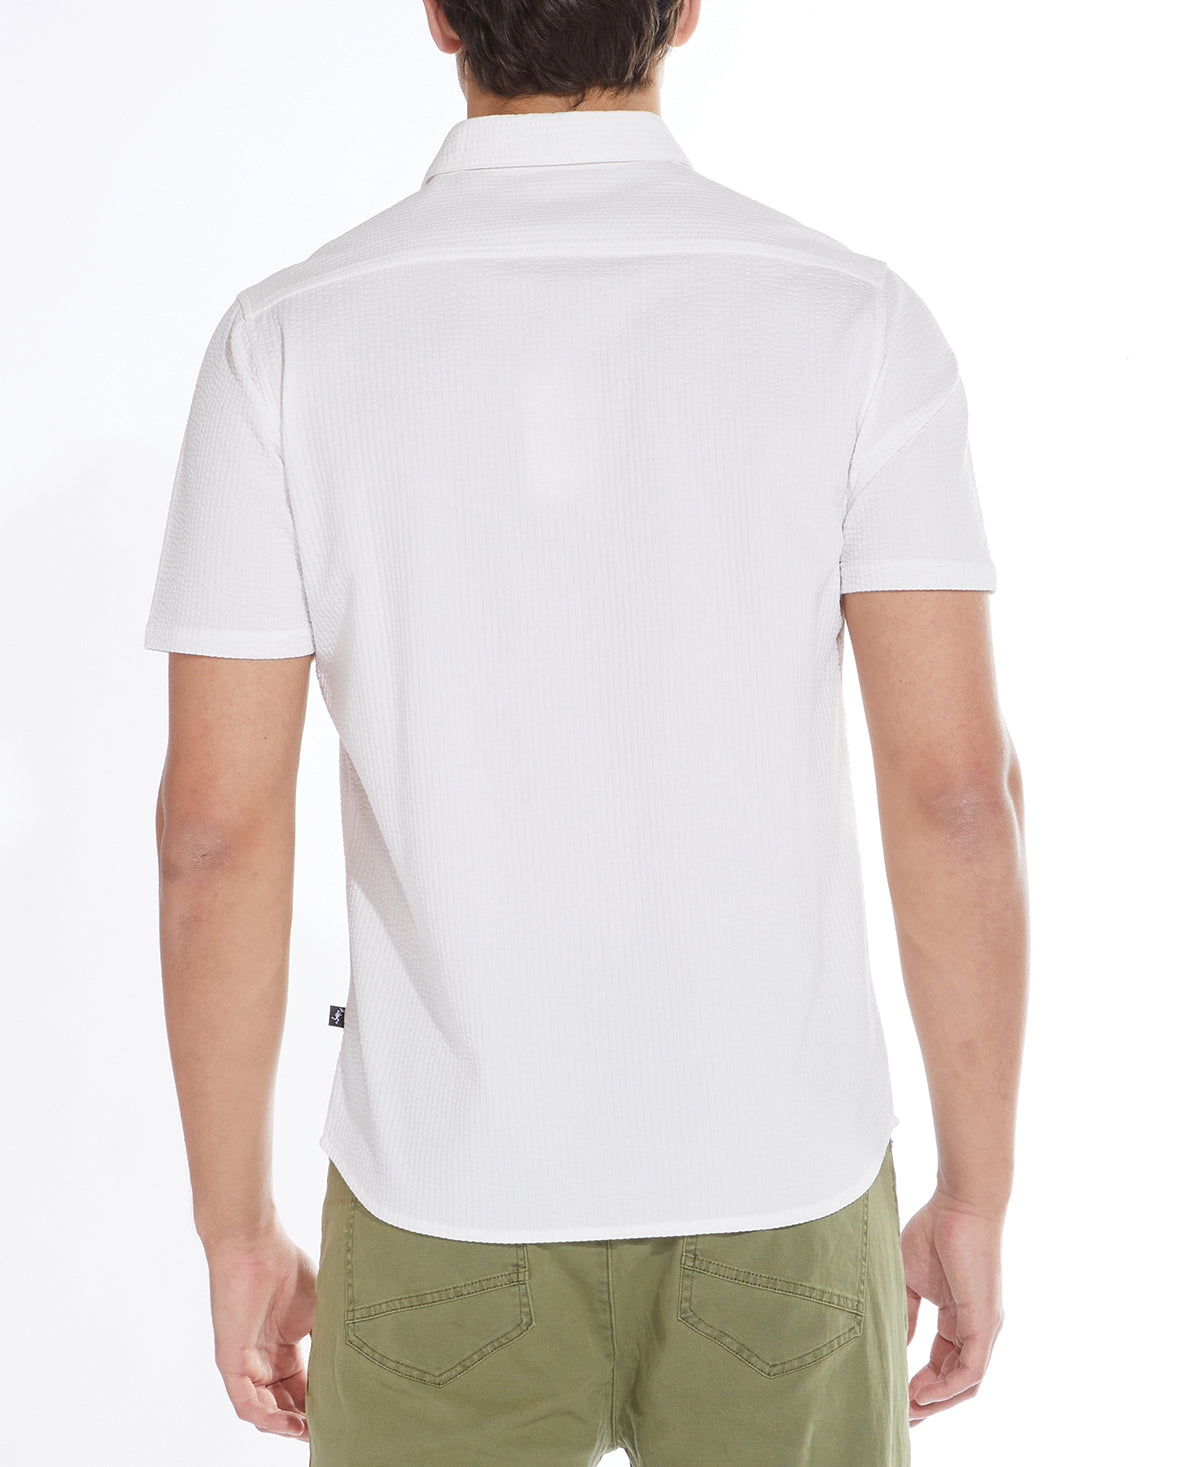 Worley Knit Shirt White